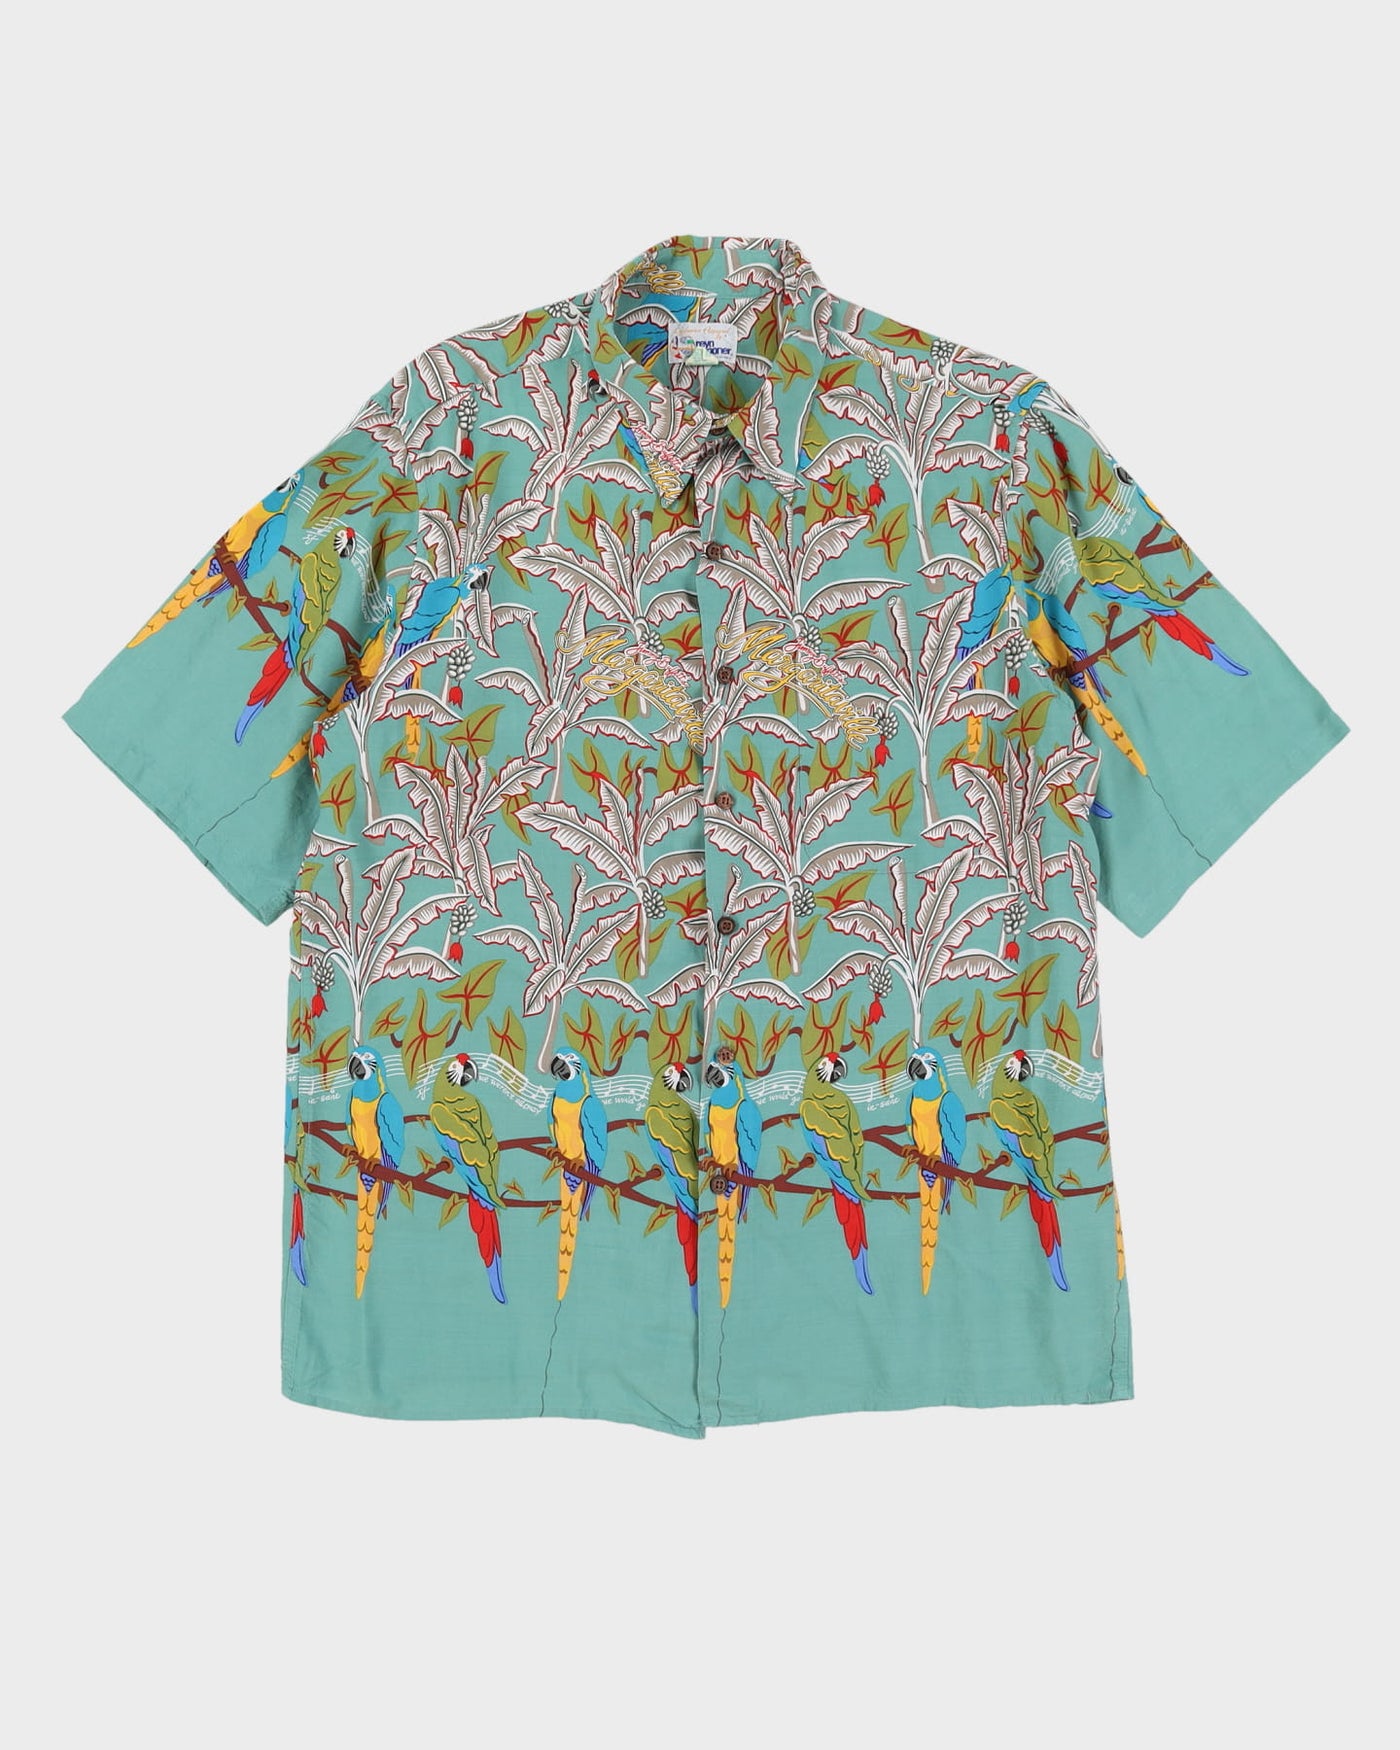 00s Green Parrot Patterned Hawaiian Shirt - L